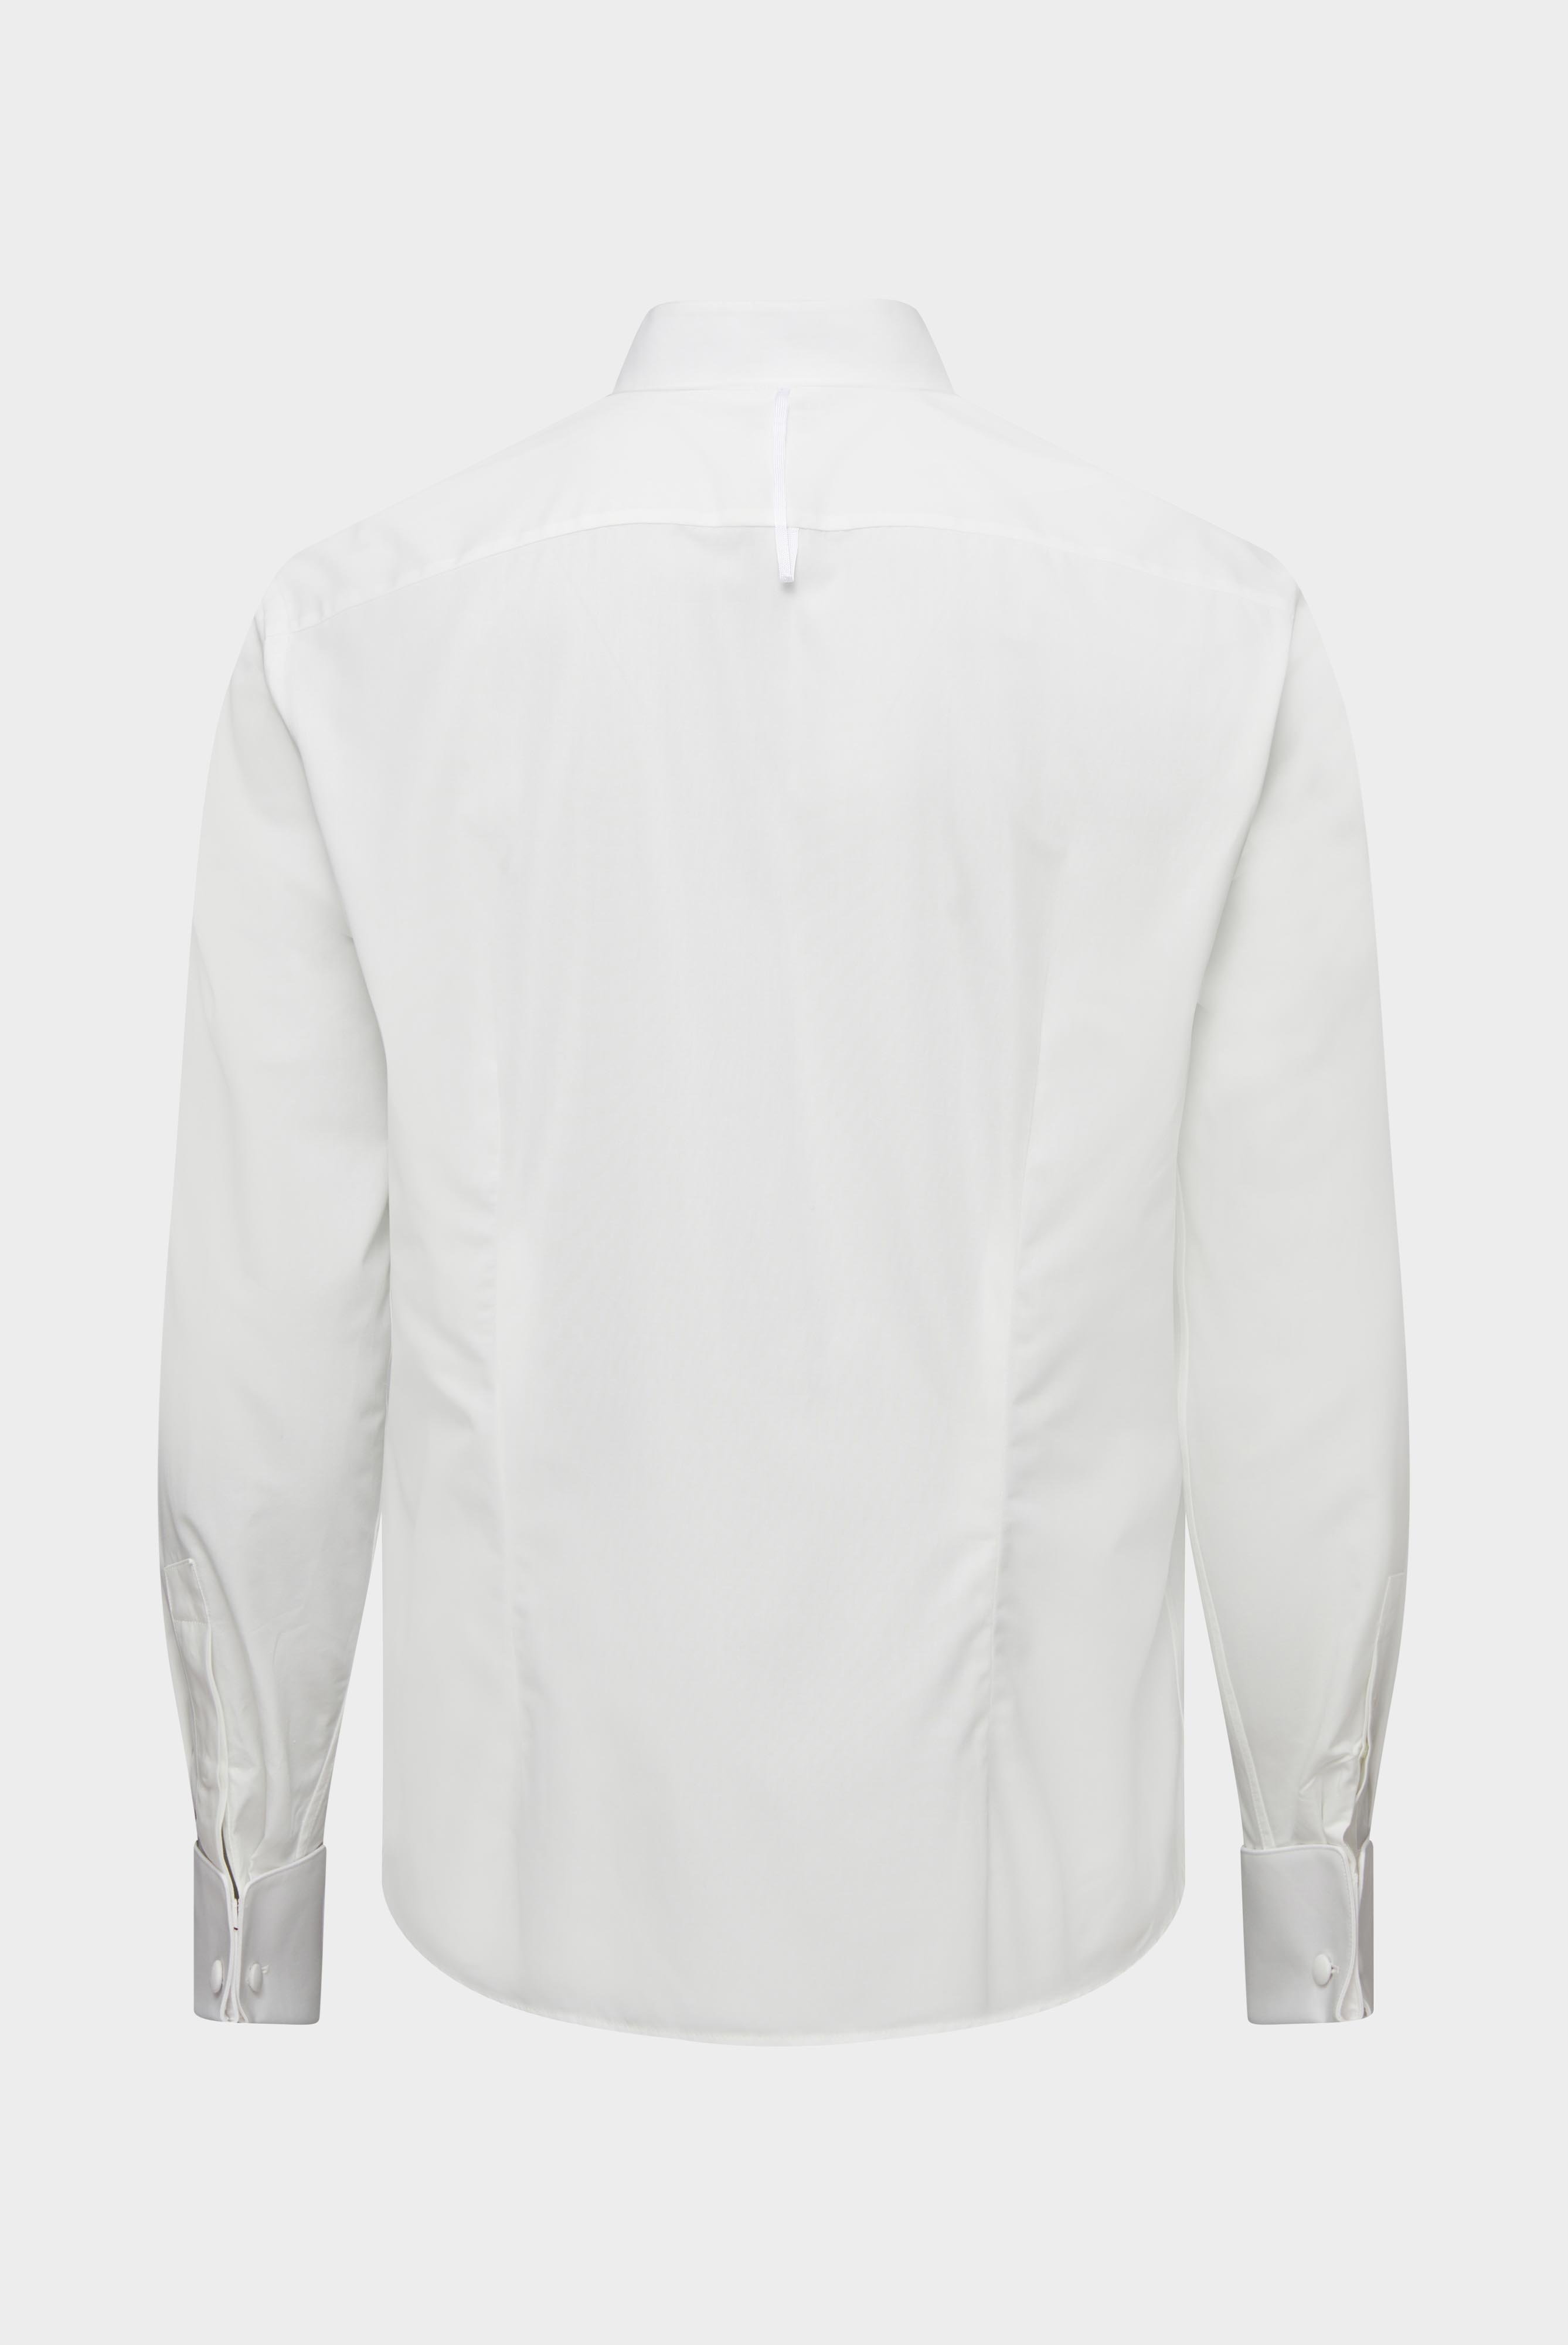 Festliche Hemden+Poplin Wing Collar Evening Shirt+20.2060.NV.130657.100.37